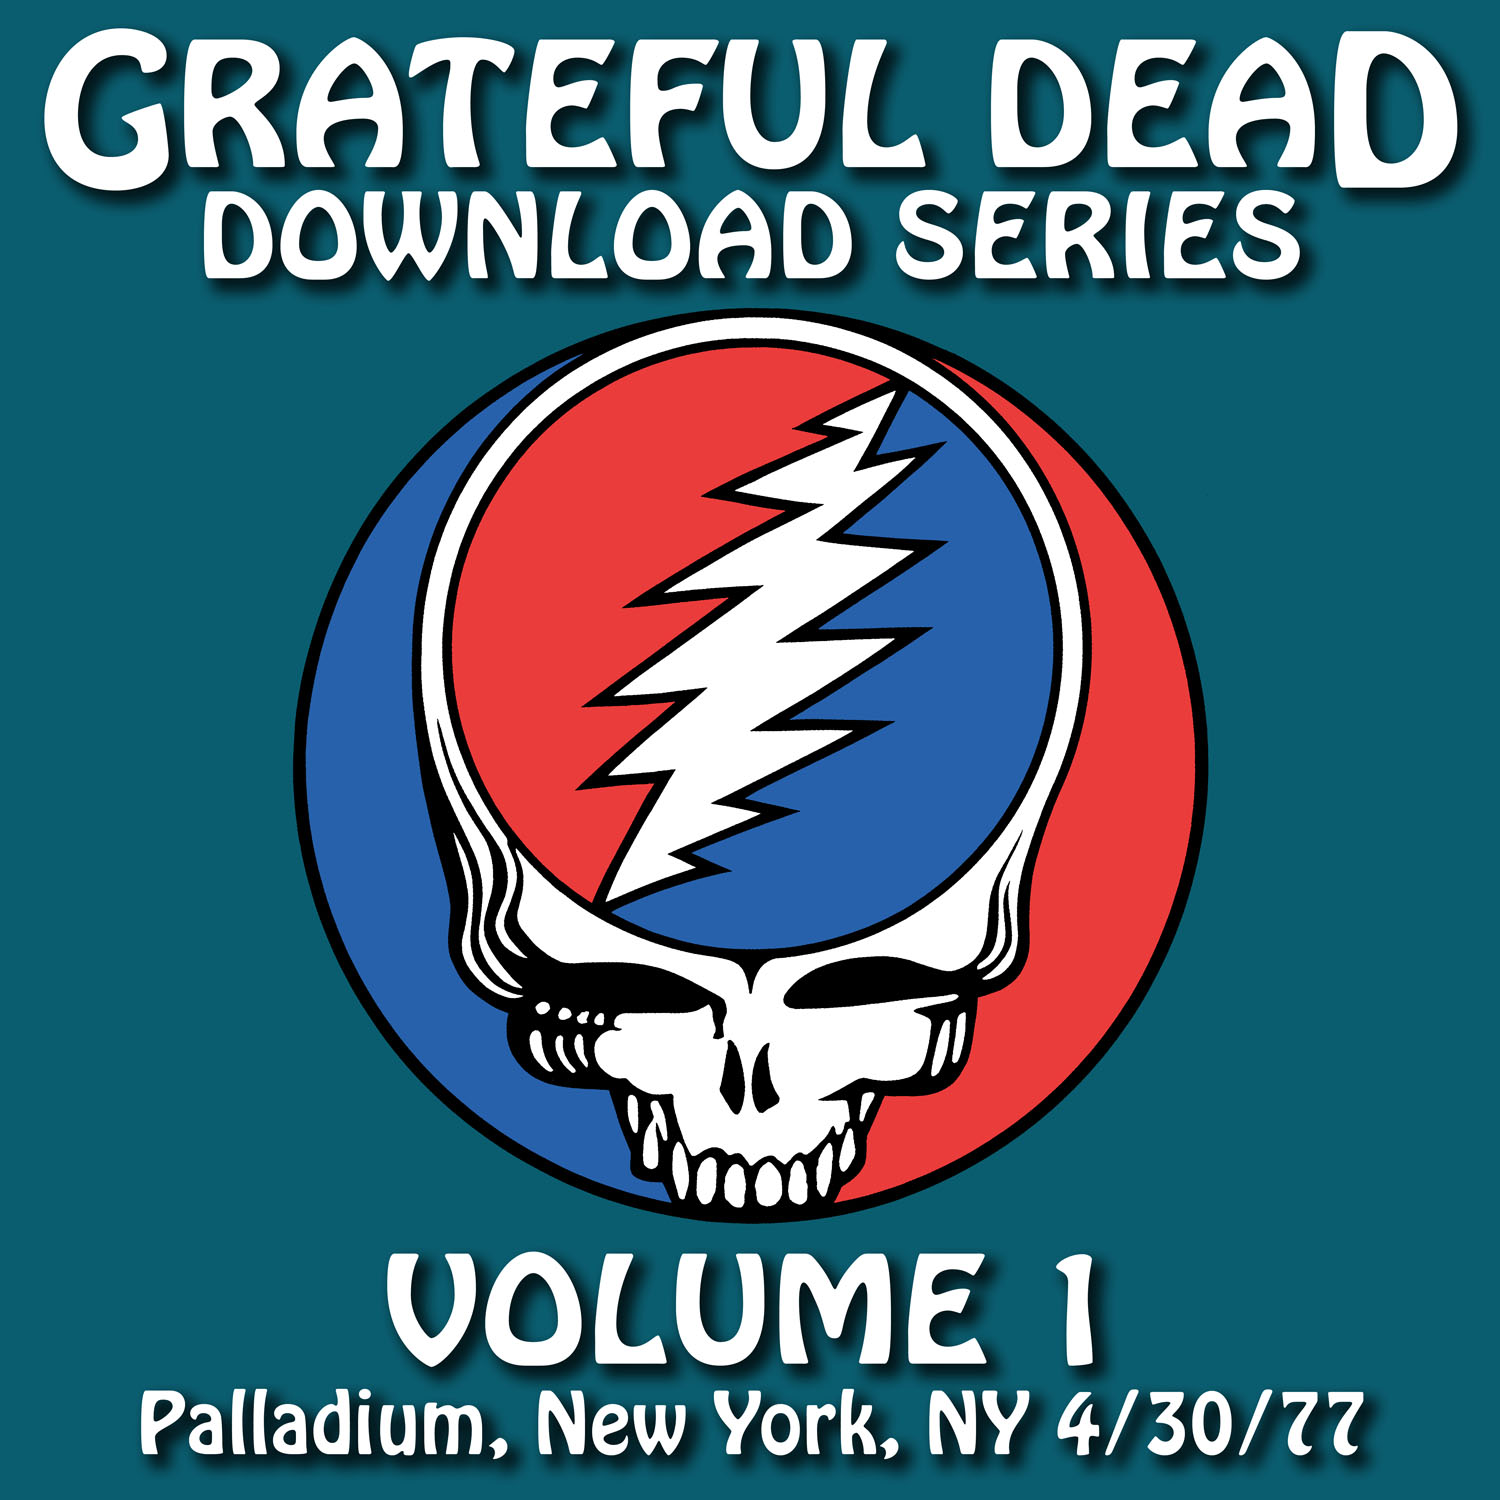 Grateful Dead Download Series 1 album cover artwork